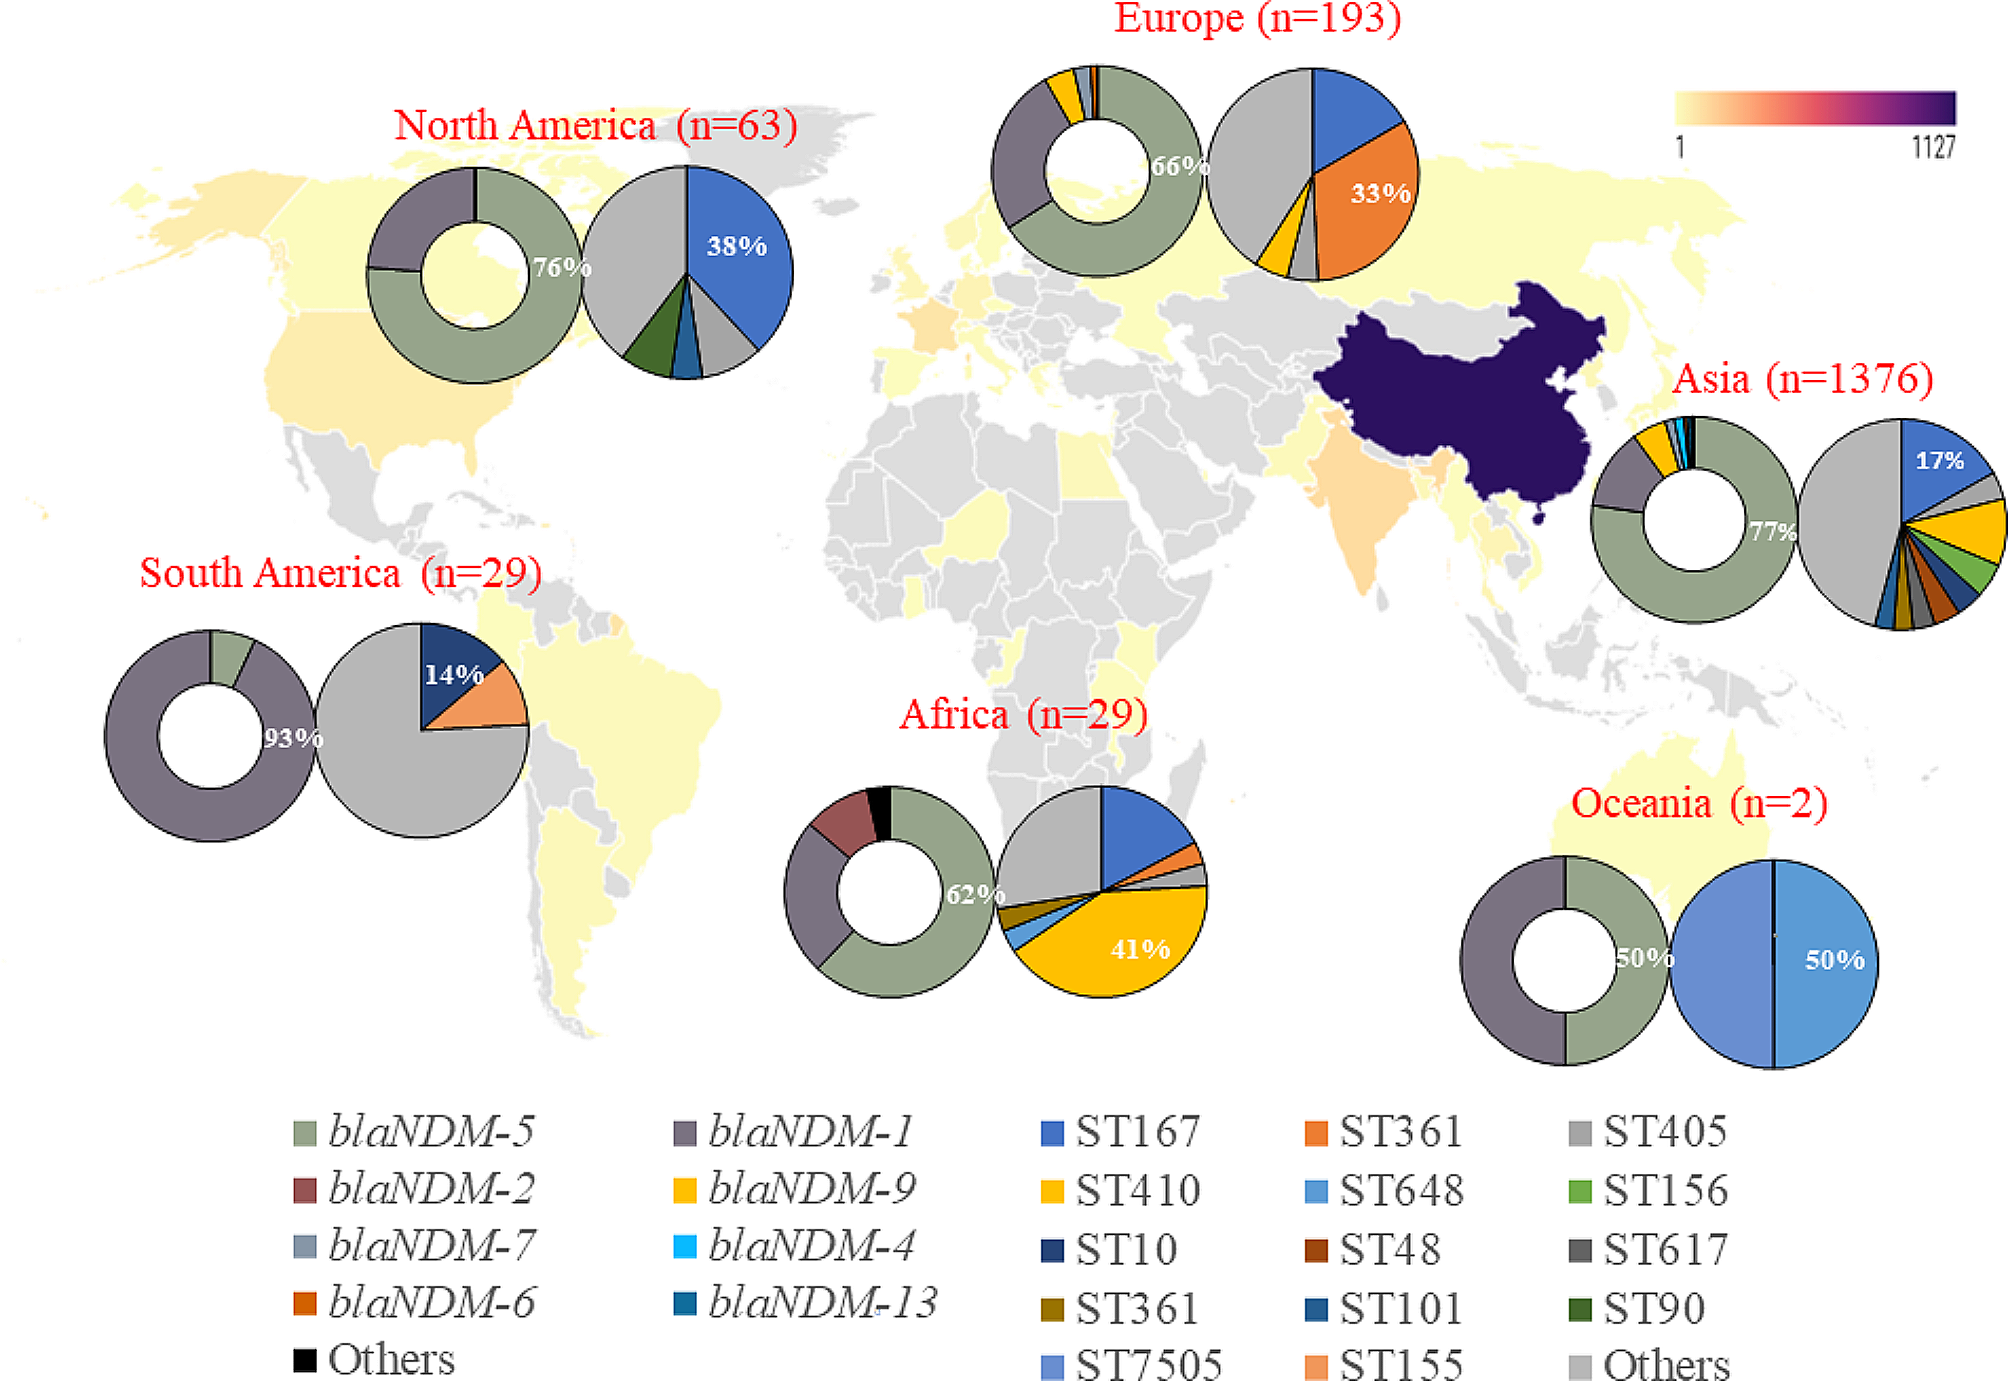 Epidemiological and genomic characteristics of global blaNDM-carrying Escherichia coli